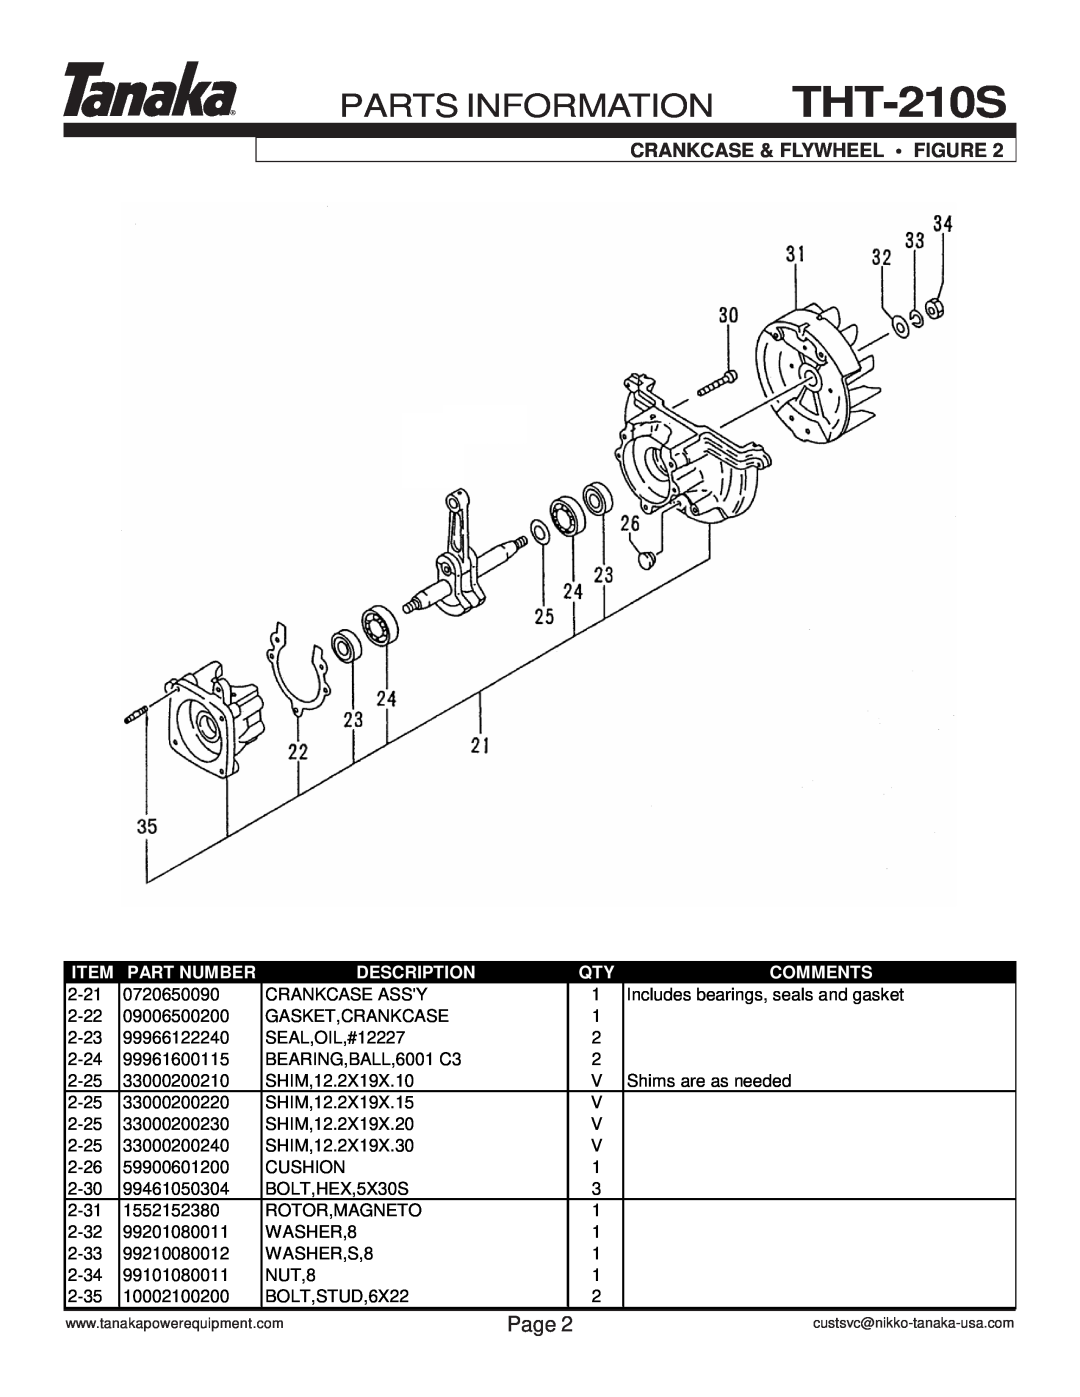 Tanaka manual Crankcase & Flywheel • Figure, PARTS INFORMATION THT-210S, Page, Item, Part Number, Description, Comments 